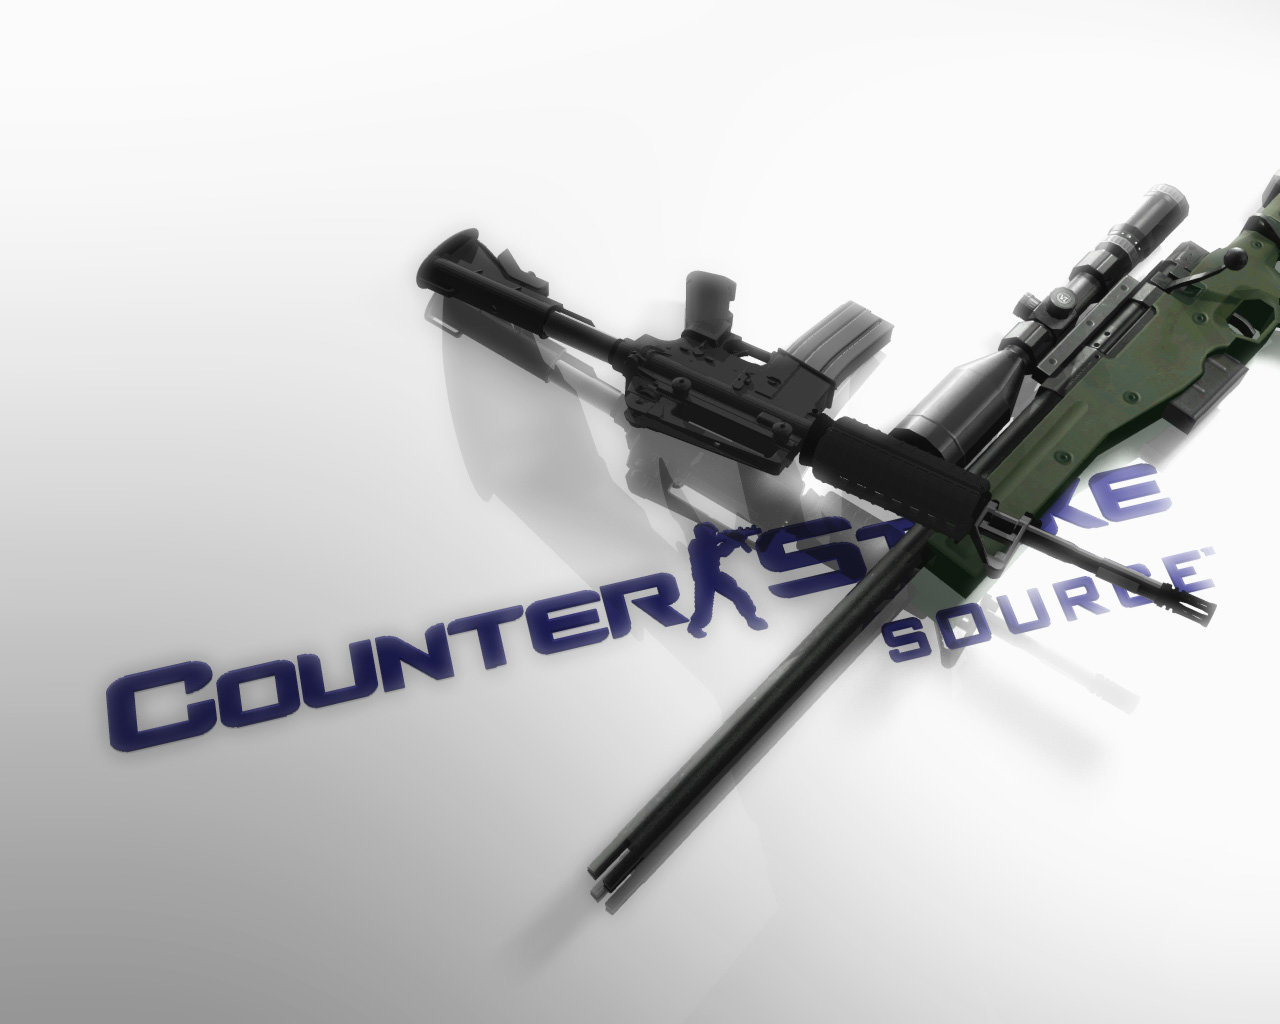 Counter Strike Wallpaper Hd Background | Загрузка изображений